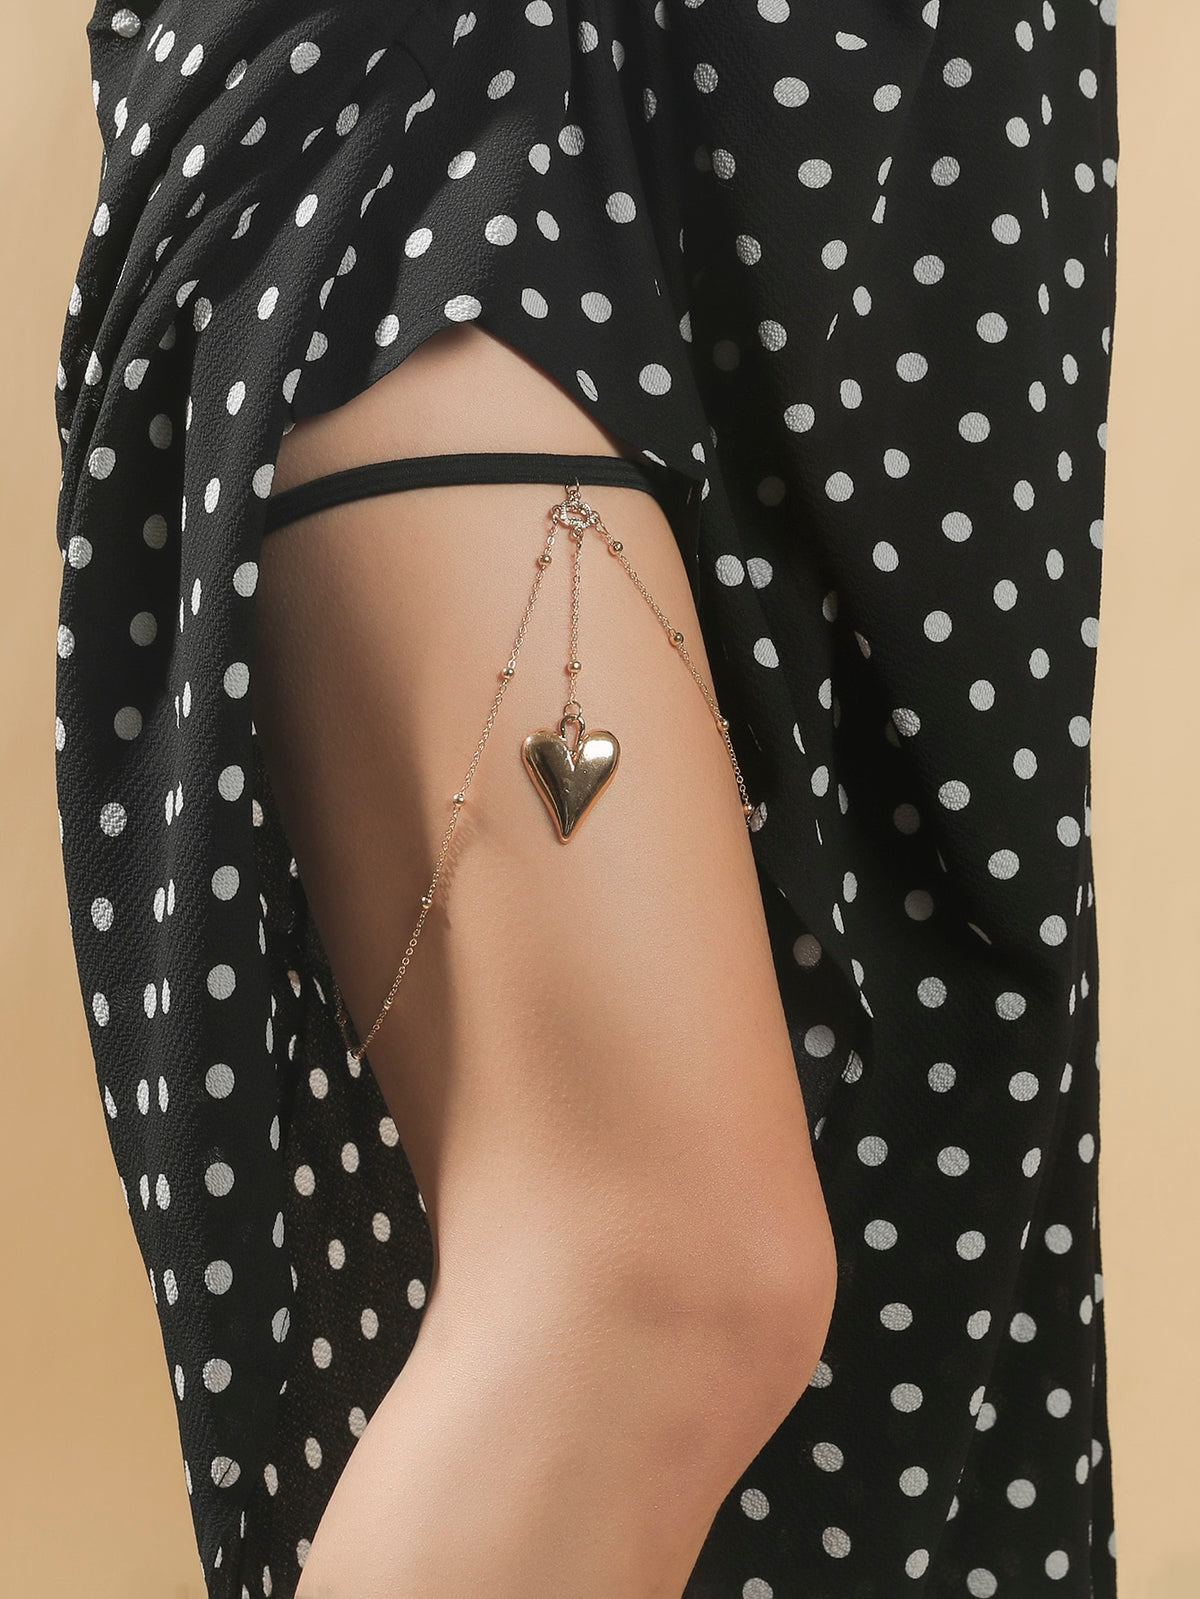 Arzonai Heart Charm Leg Chain | Bikini Body Jewelry for women and Girls